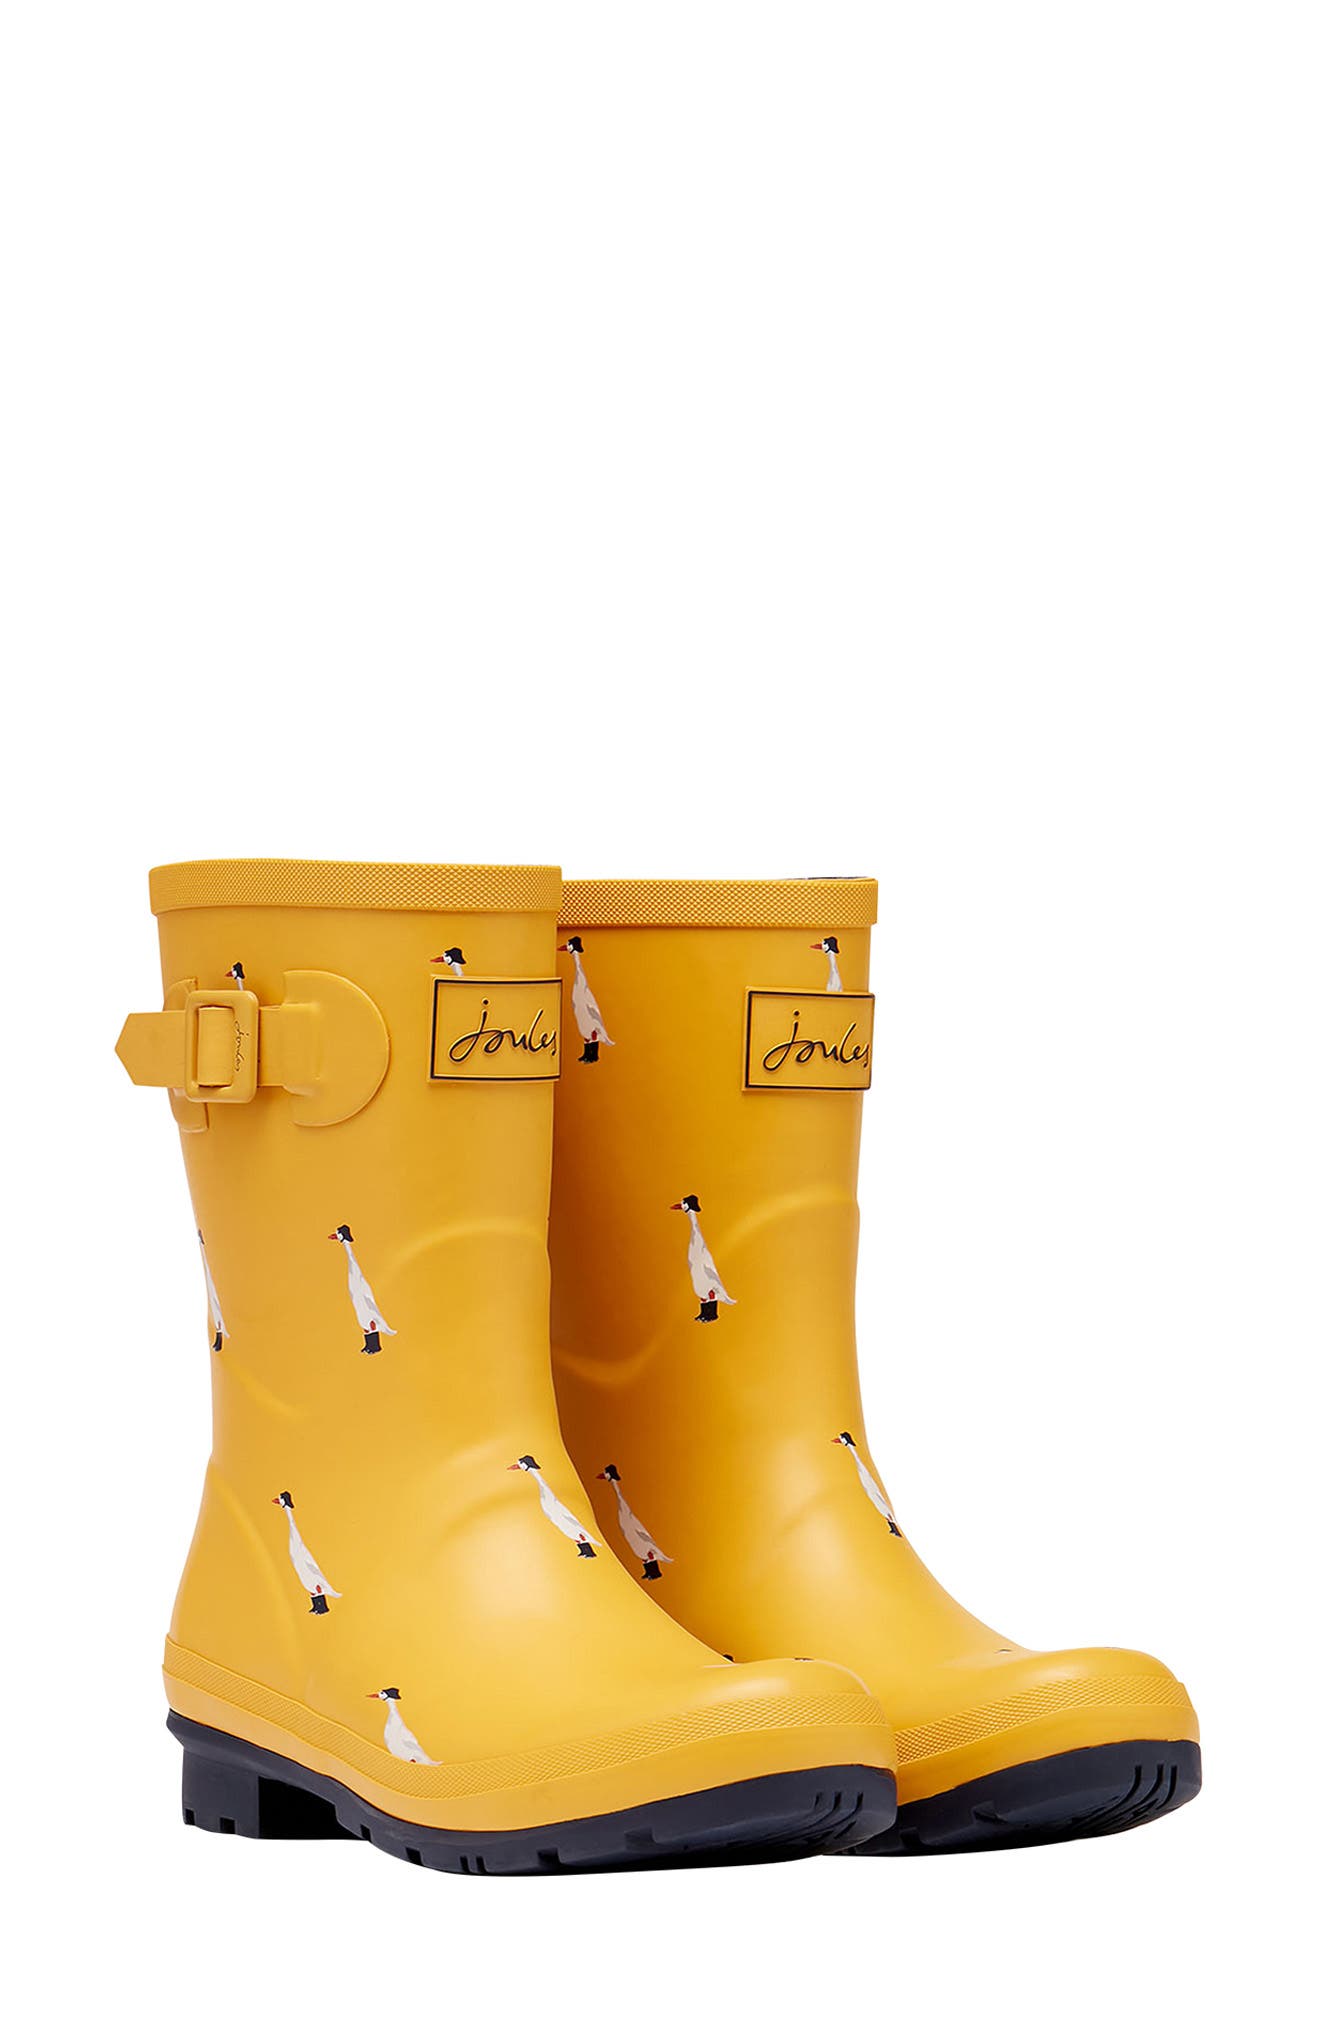 womens yellow rain boots size 7